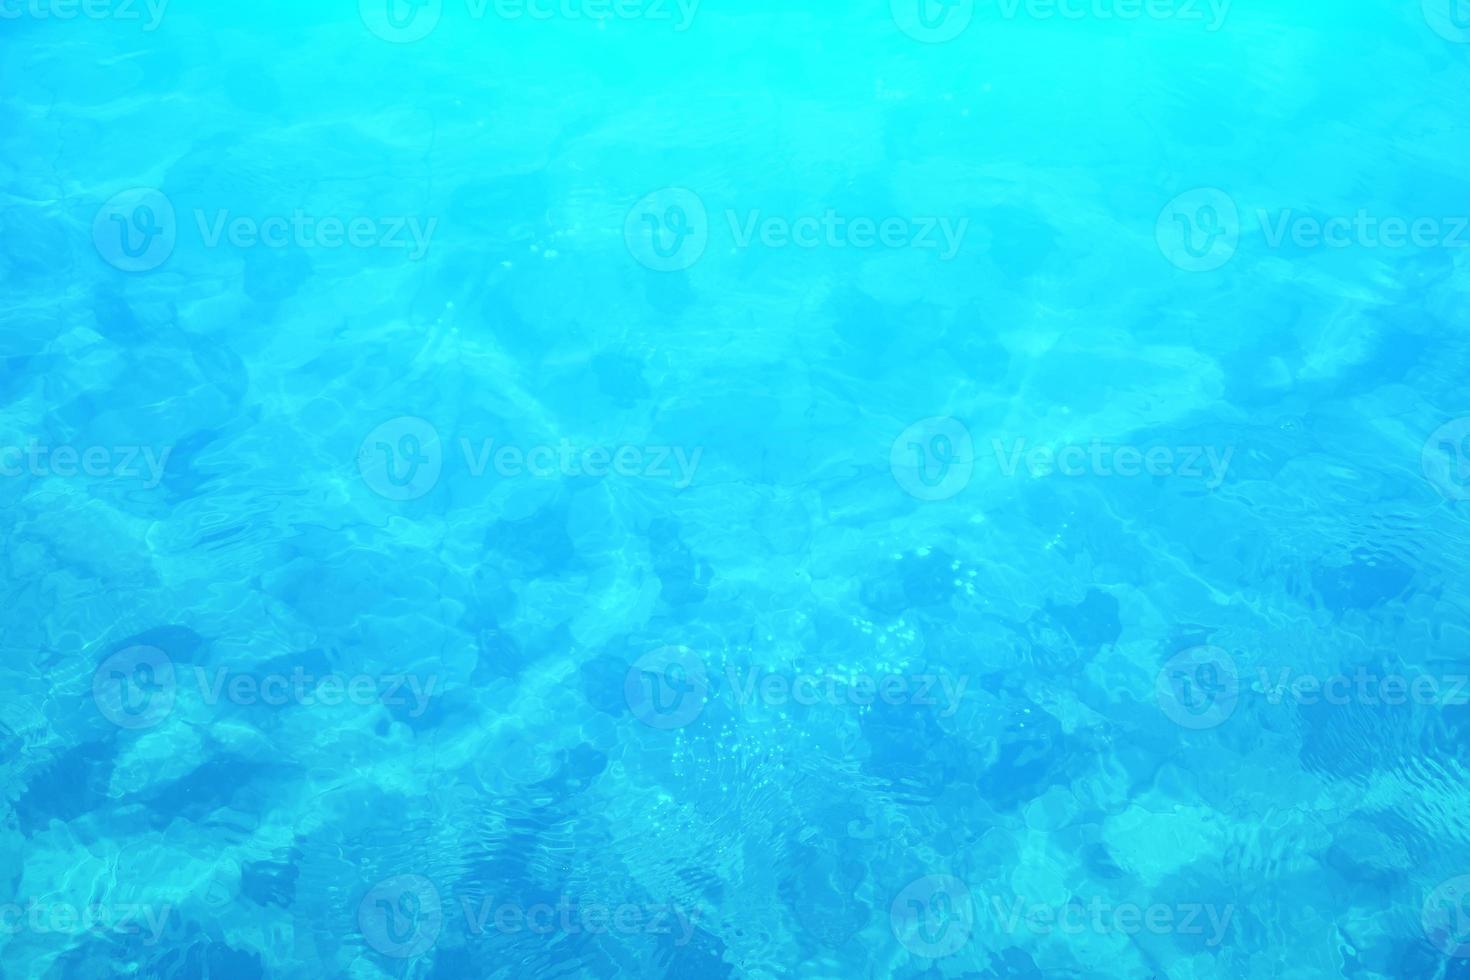 desenfoque de agua azul borrosa que brilla en el mar. fondo de detalle de agua ondulada. la superficie del agua en el mar, fondo del océano. ola de agua bajo el fondo de la textura del mar. foto